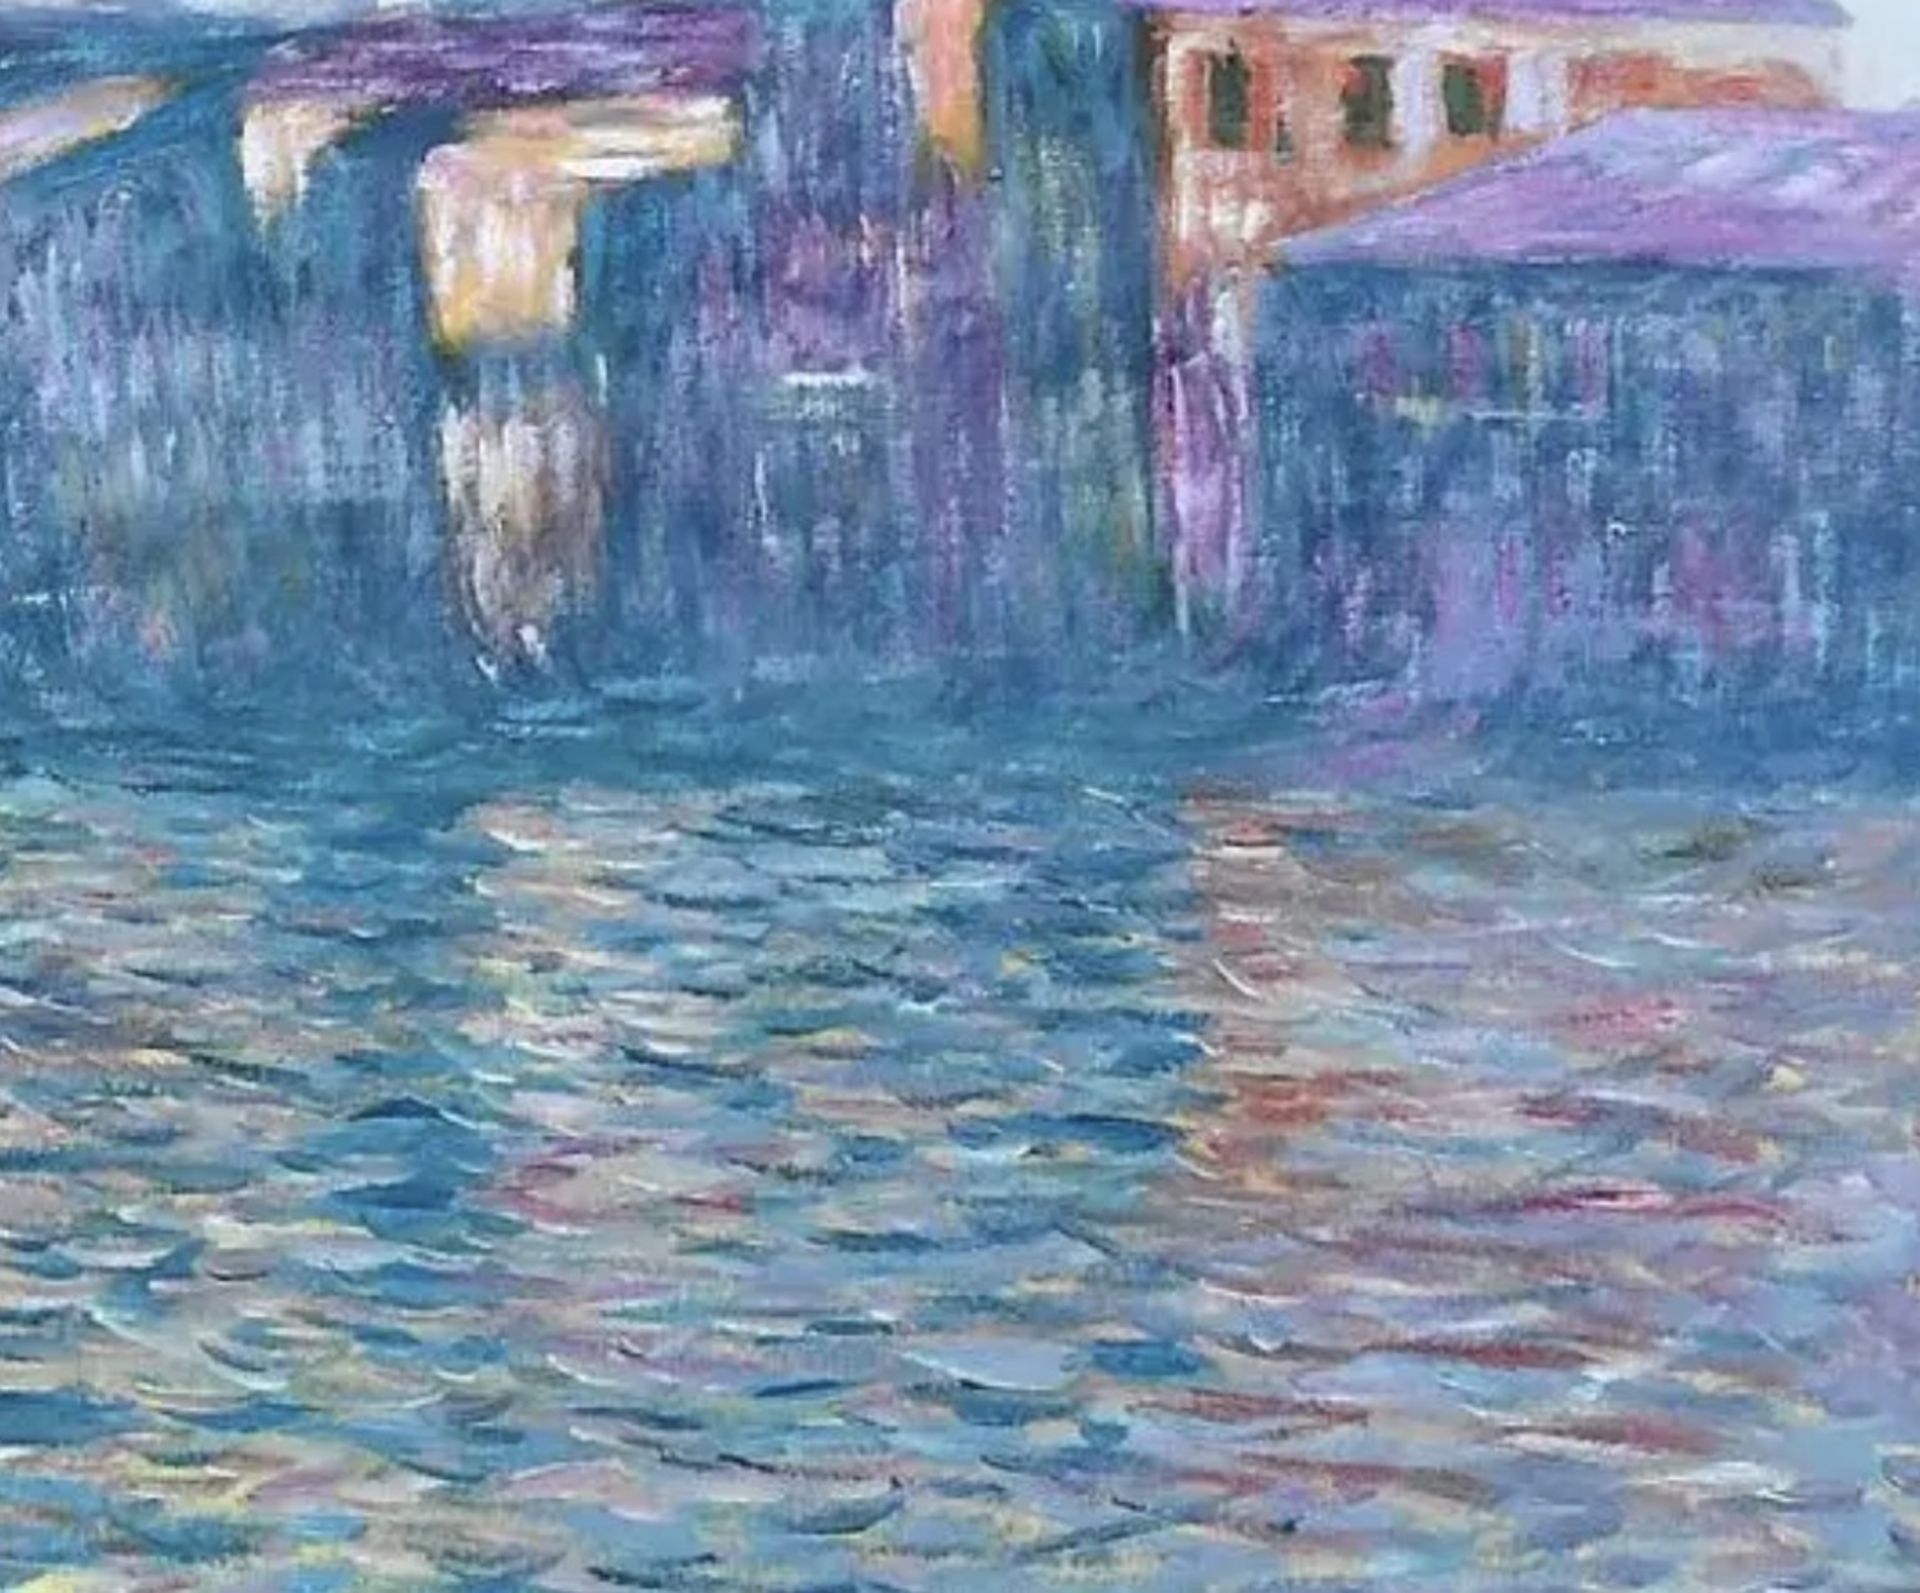 Claude Monet "The Grand Canal, Venice, 1908" Oil Painting, After - Bild 5 aus 5